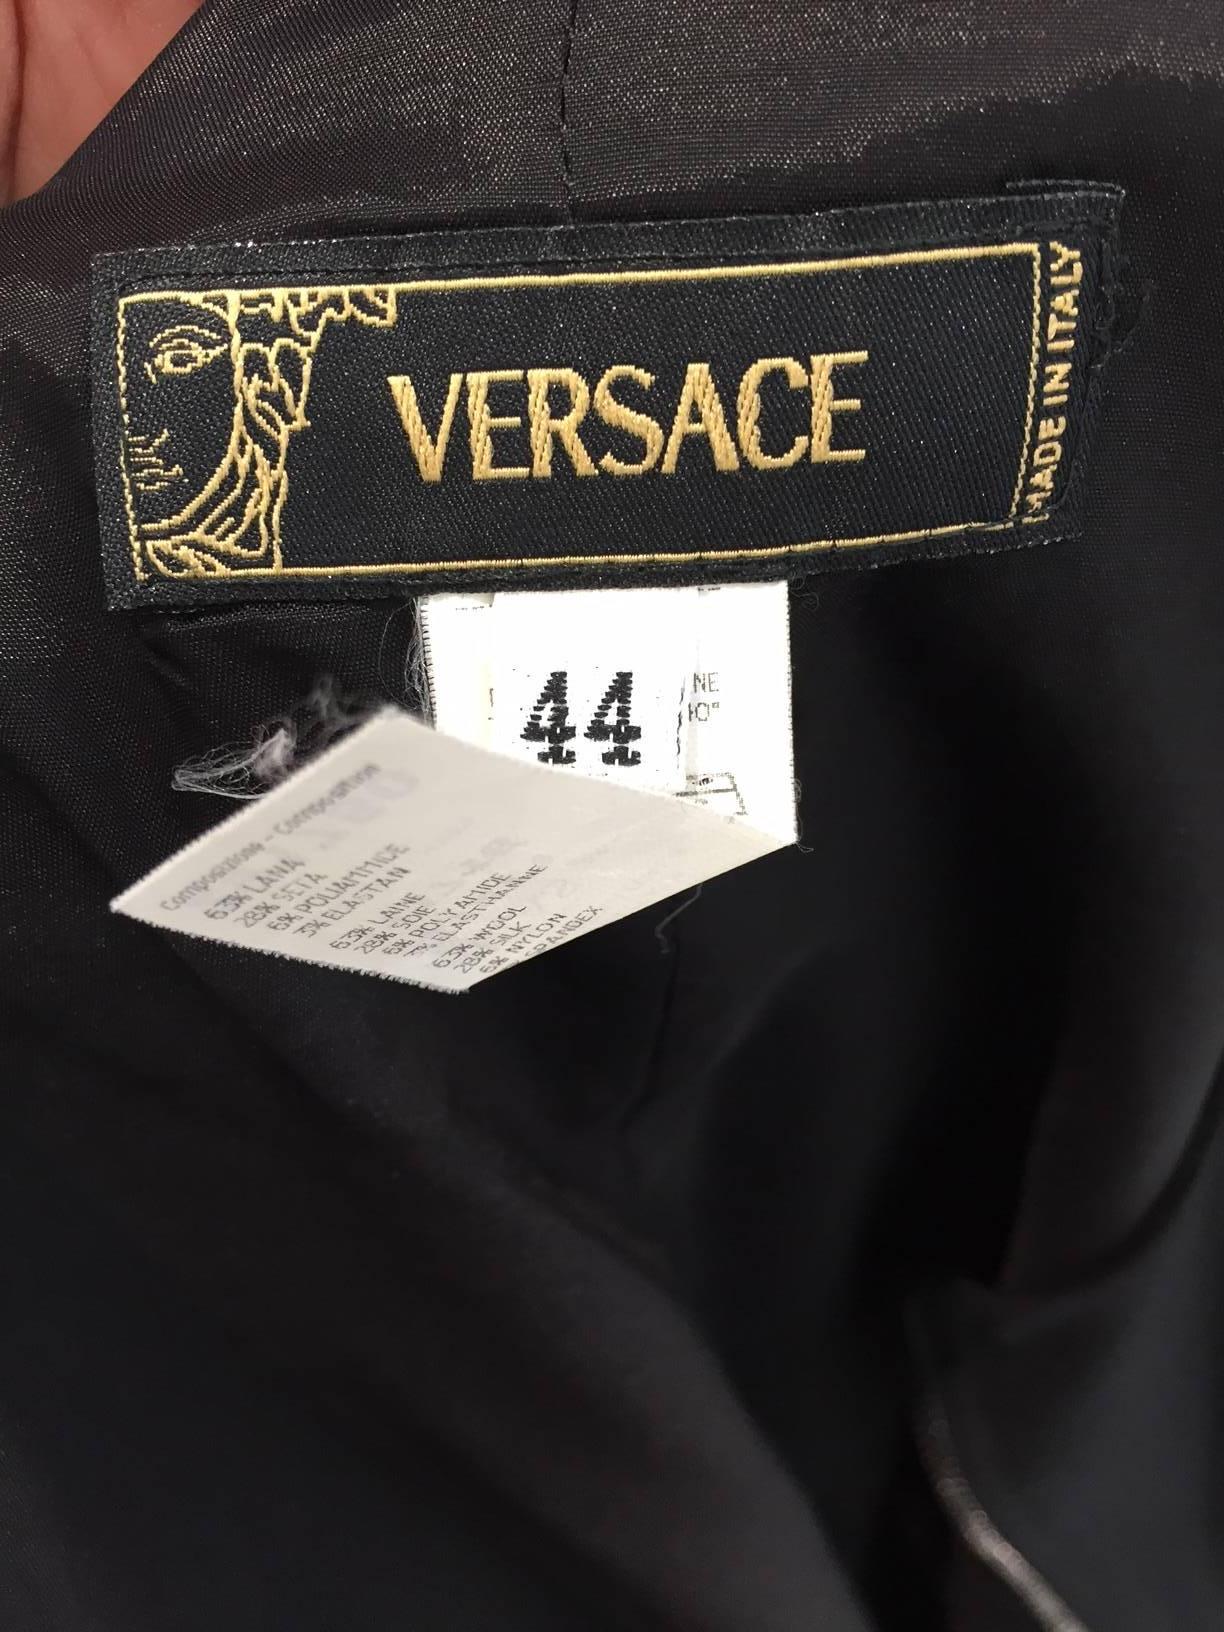 versace tags